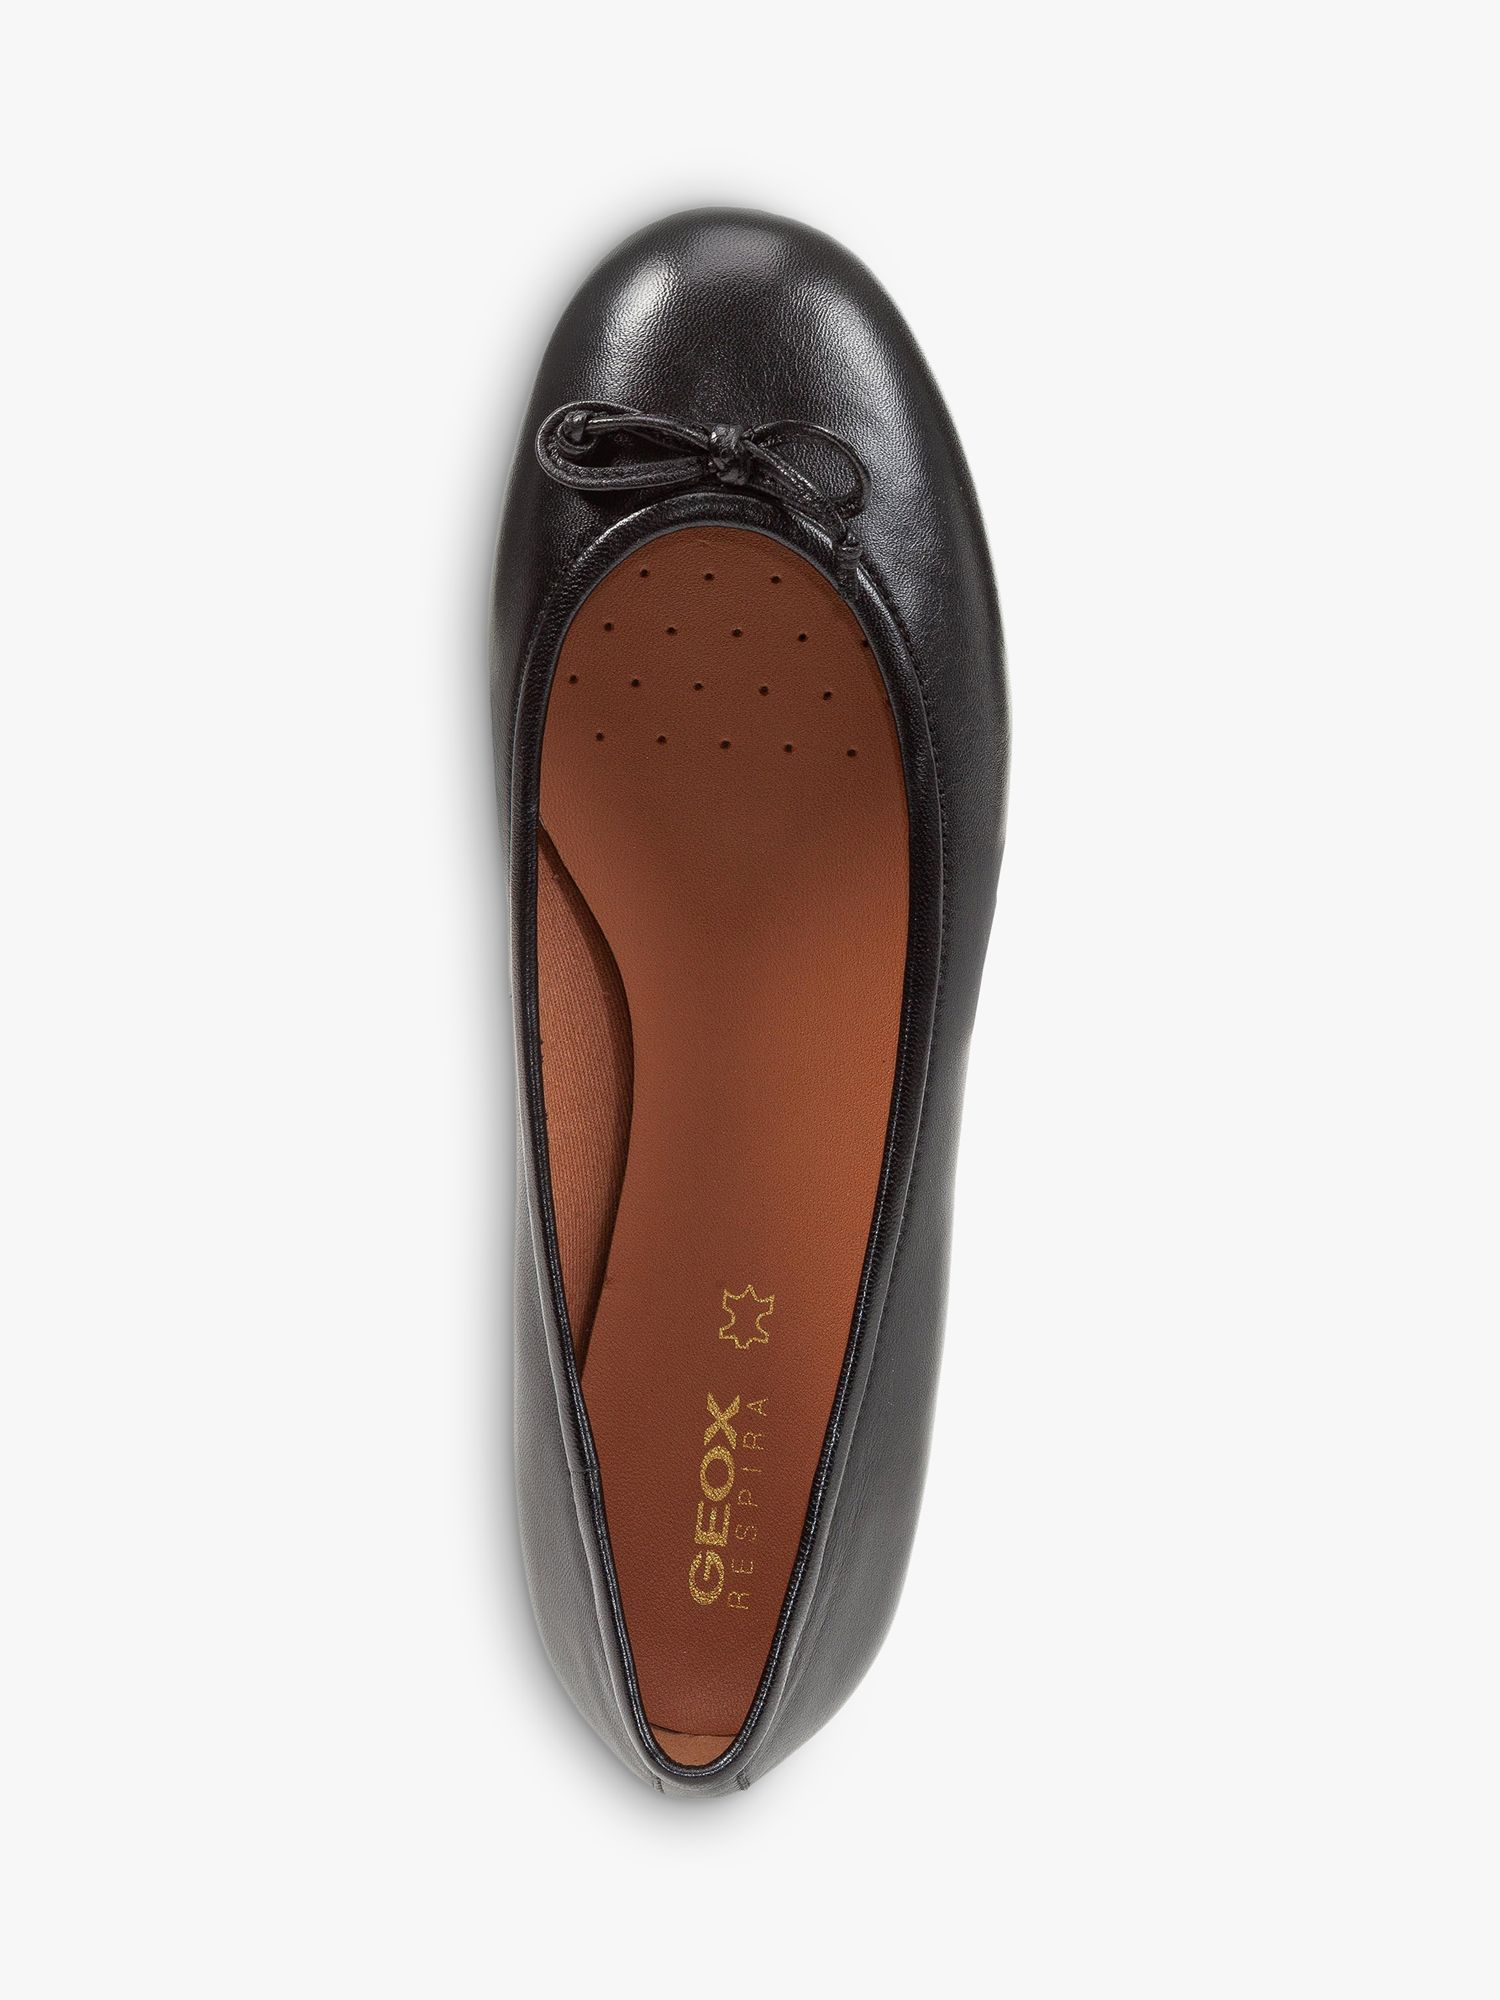 Geox Palmaria Leather Ballerina Shoes, Black at John Lewis & Partners